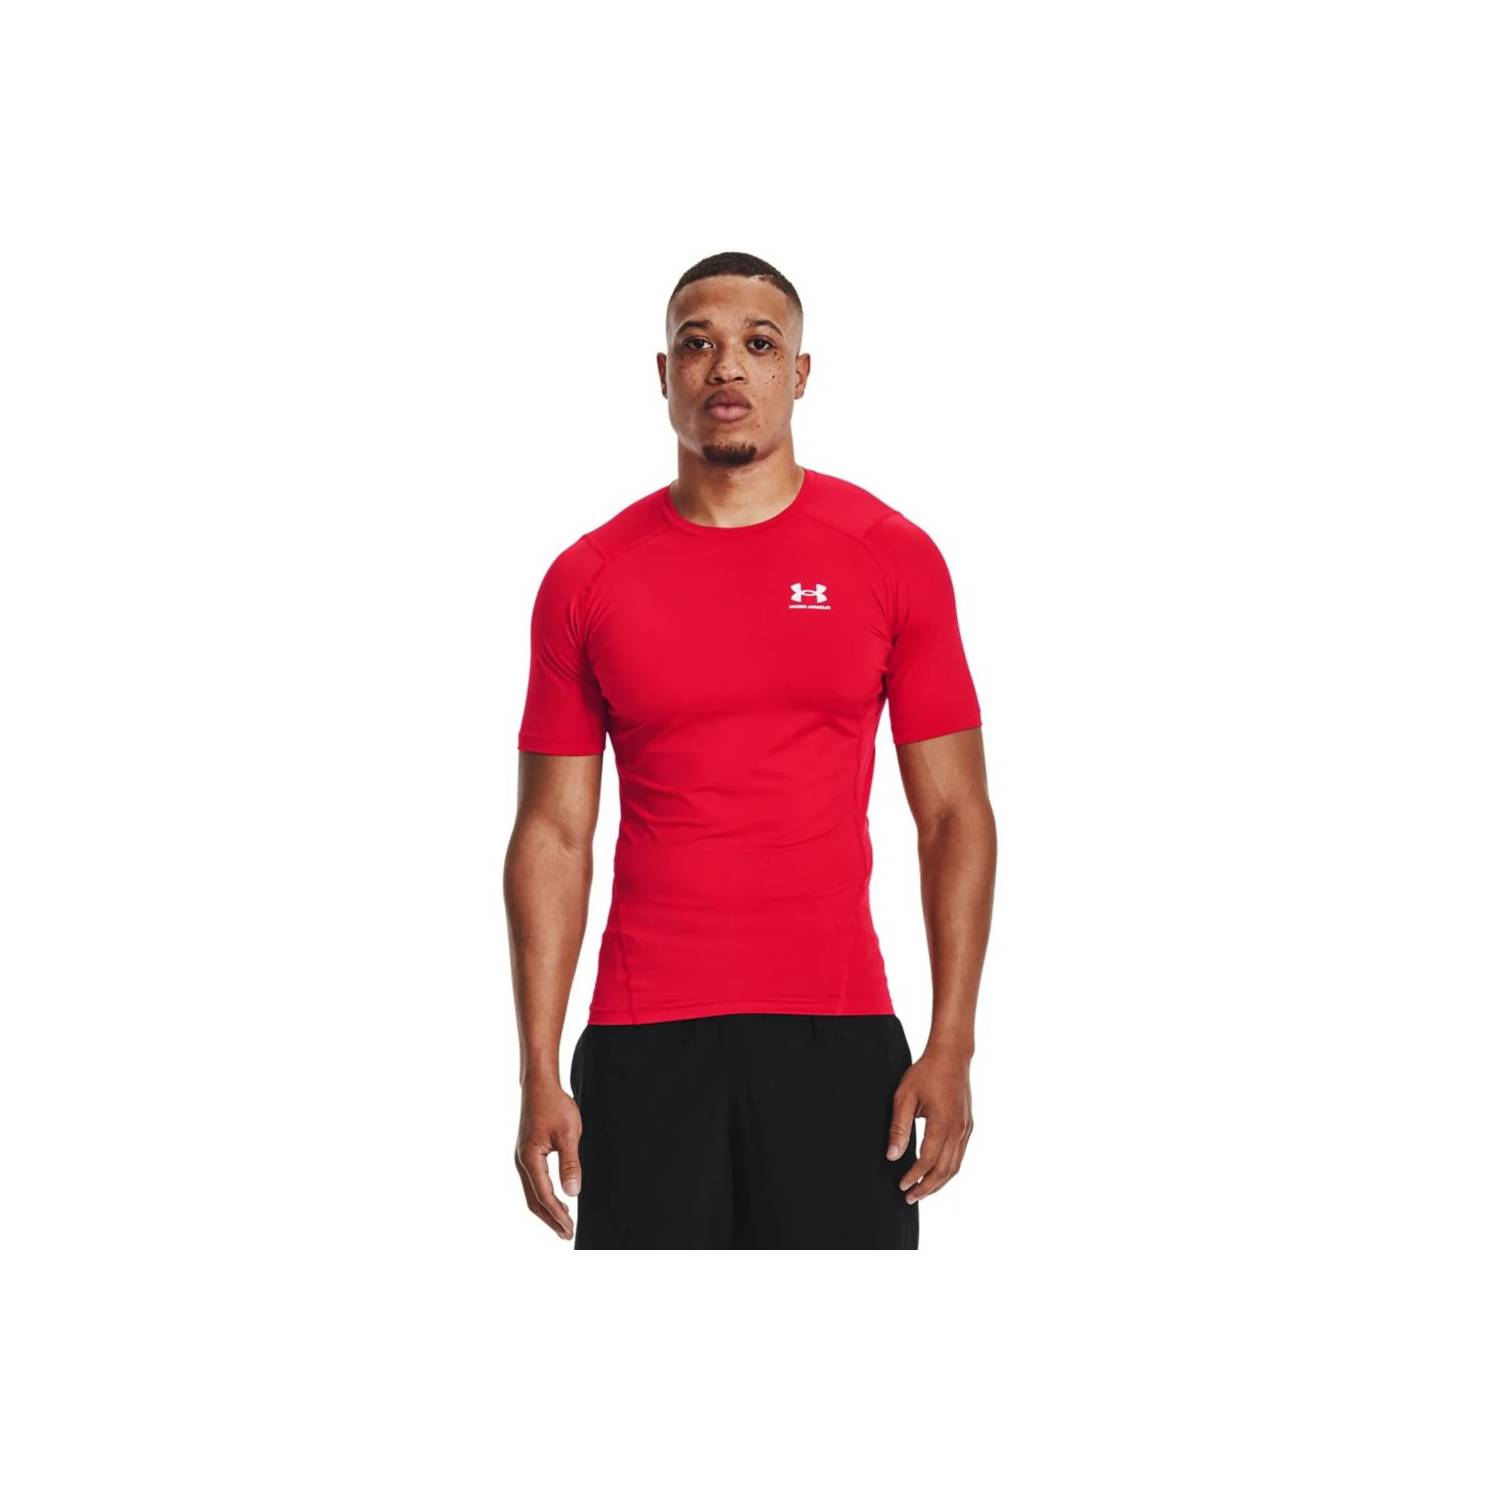 Camiseta Under Armour Hg Compression-Rojo UNDER ARMOUR